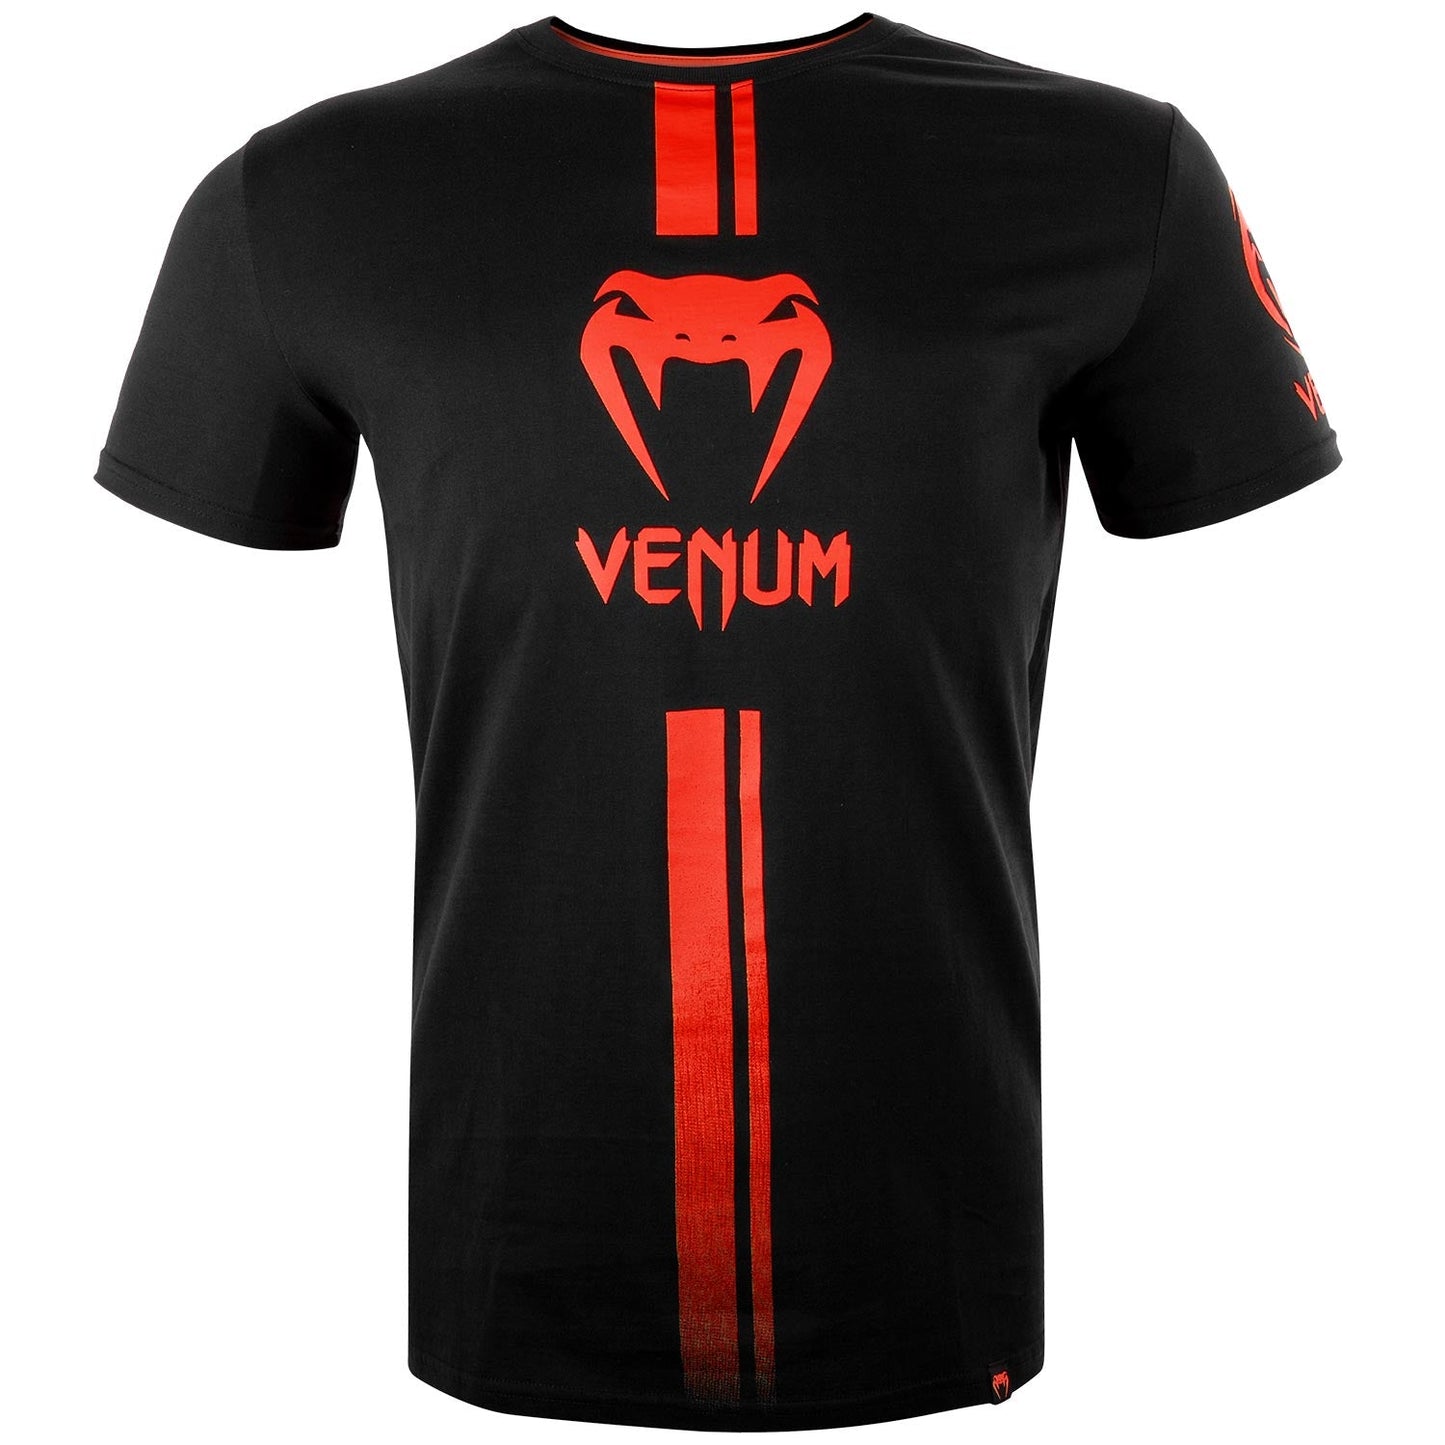 Venum Logos T-shirt - Black/Red